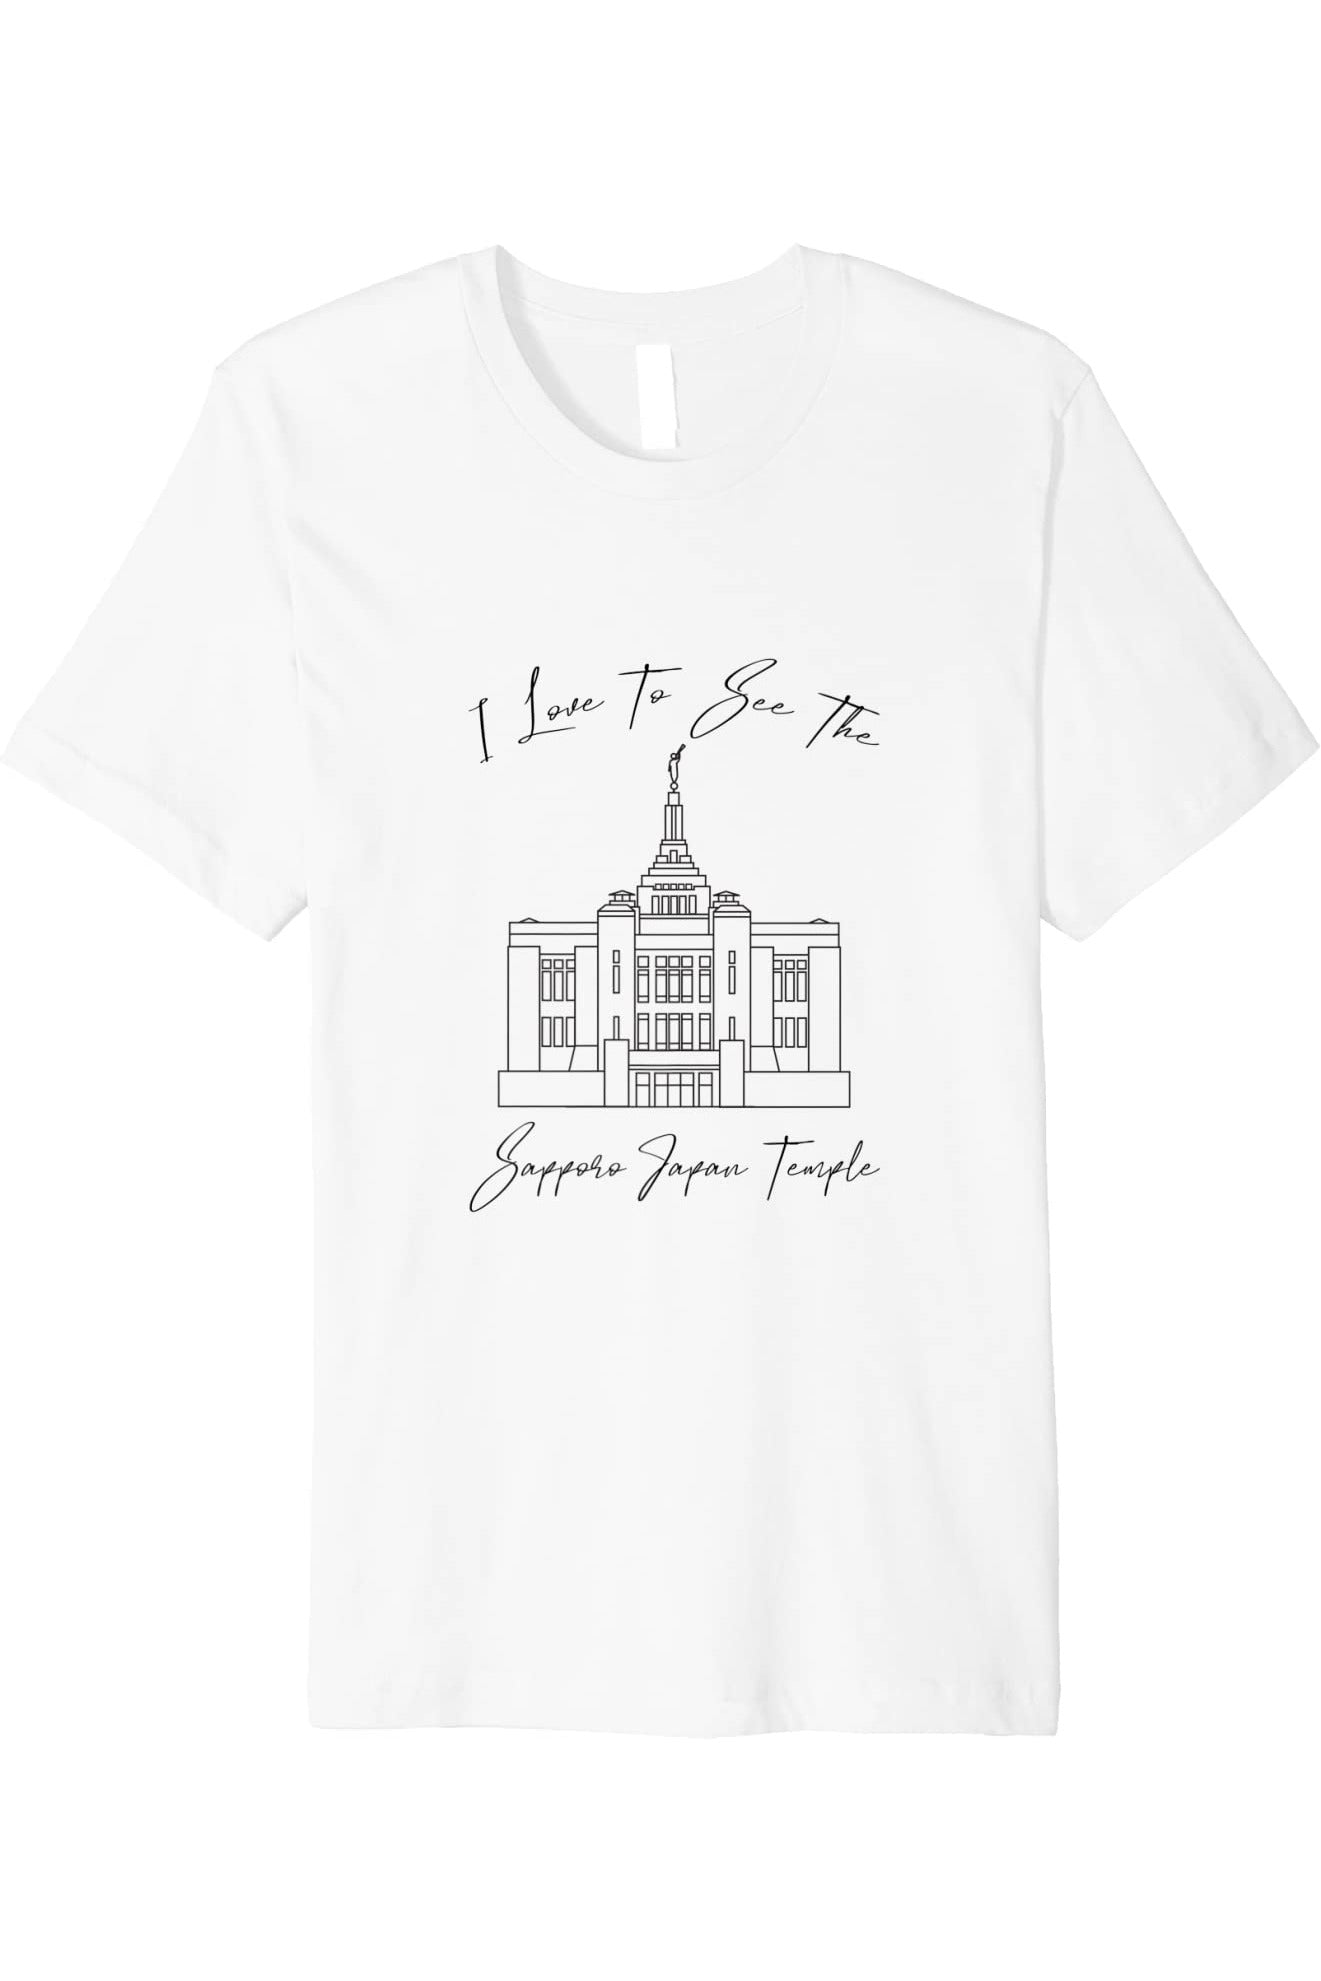 Sapporo Japan Temple T-Shirt - Premium - Calligraphy Style (English) US